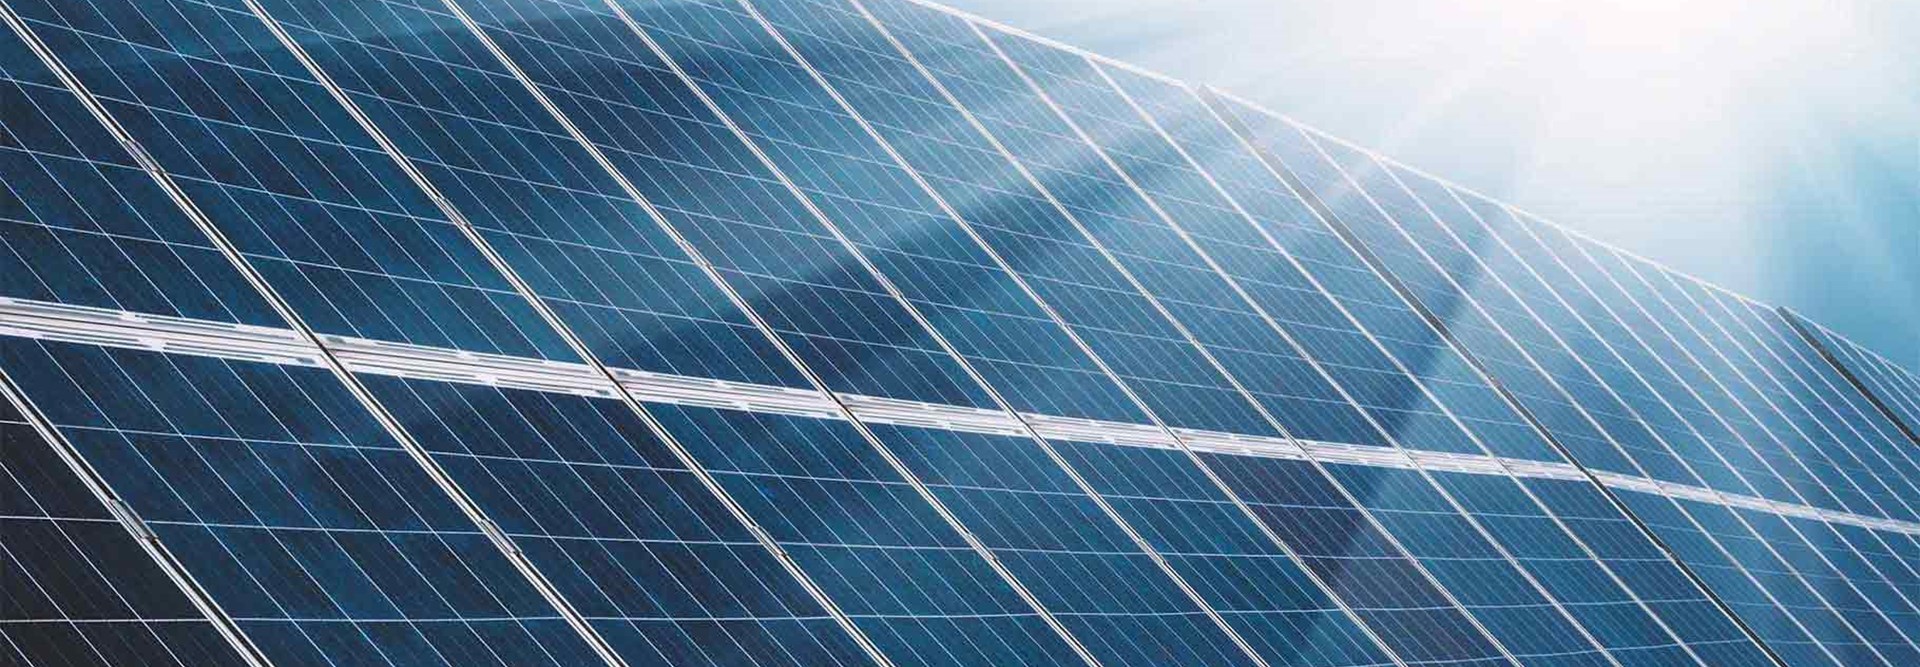 Vantagens da energia solar para empresas